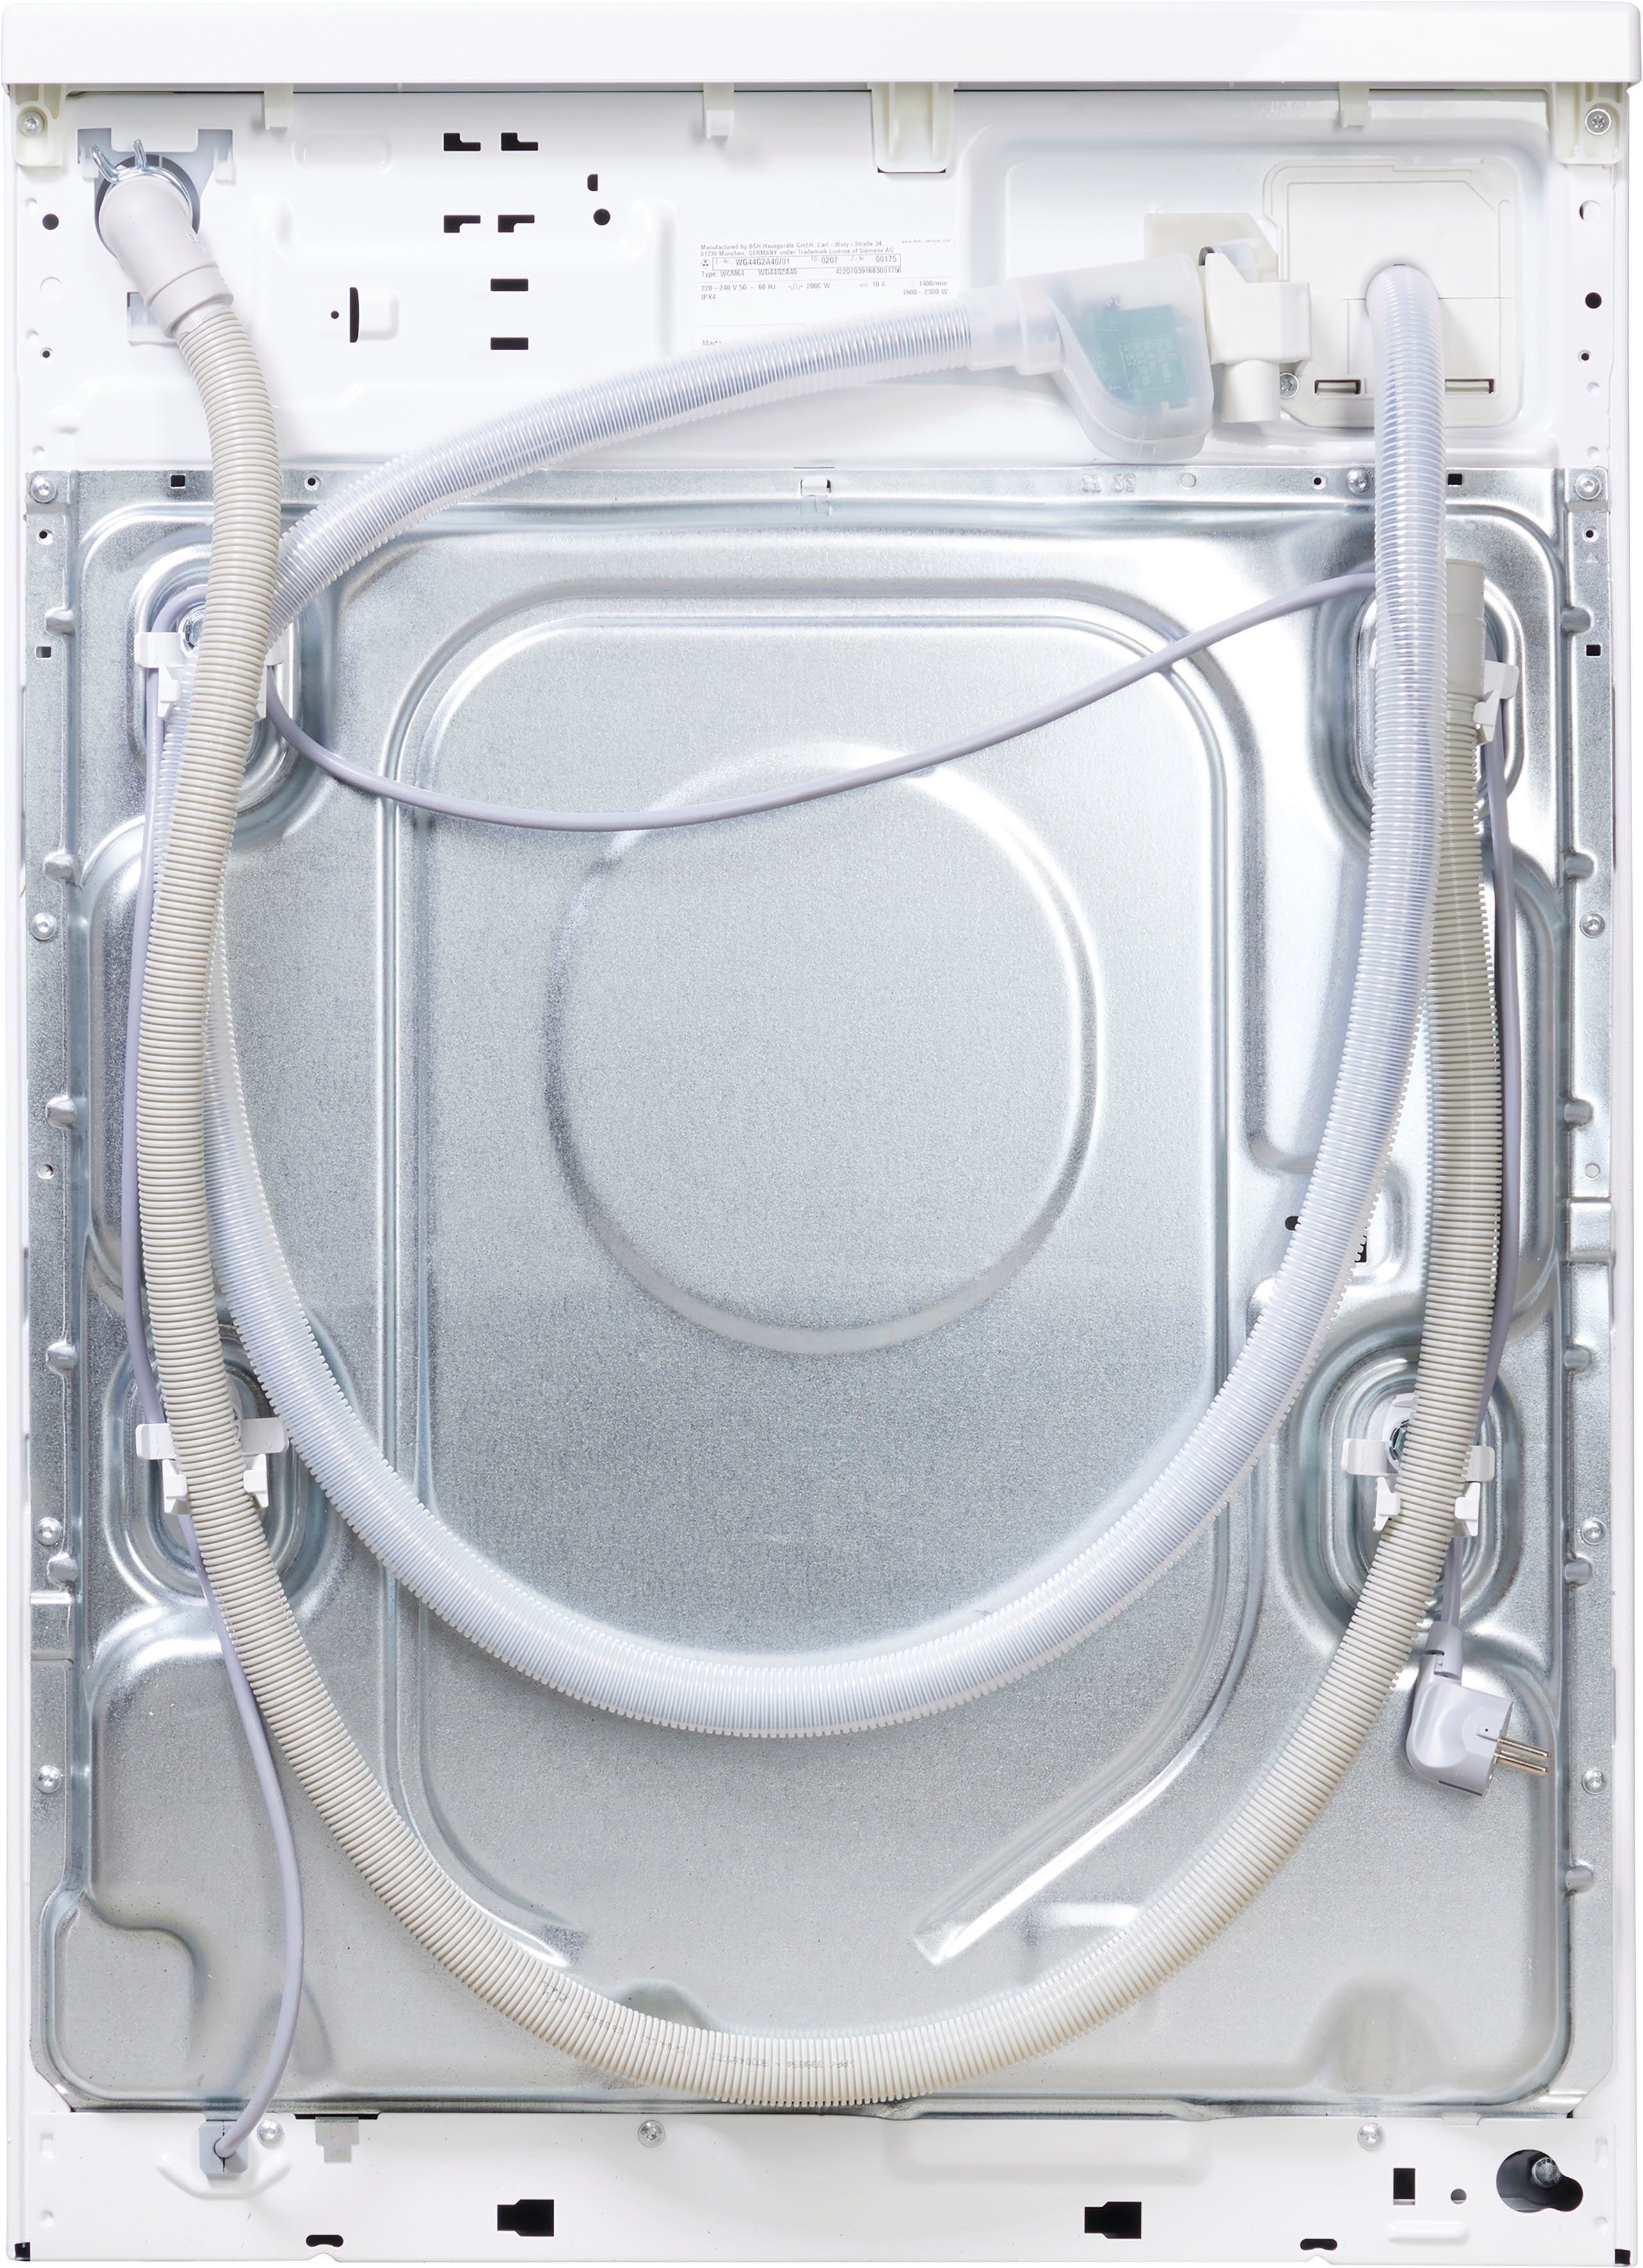 Dosierautomatik - SIEMENS 9 Waschmaschine WG44G2A40, i-Dos kg, U/min, 1400